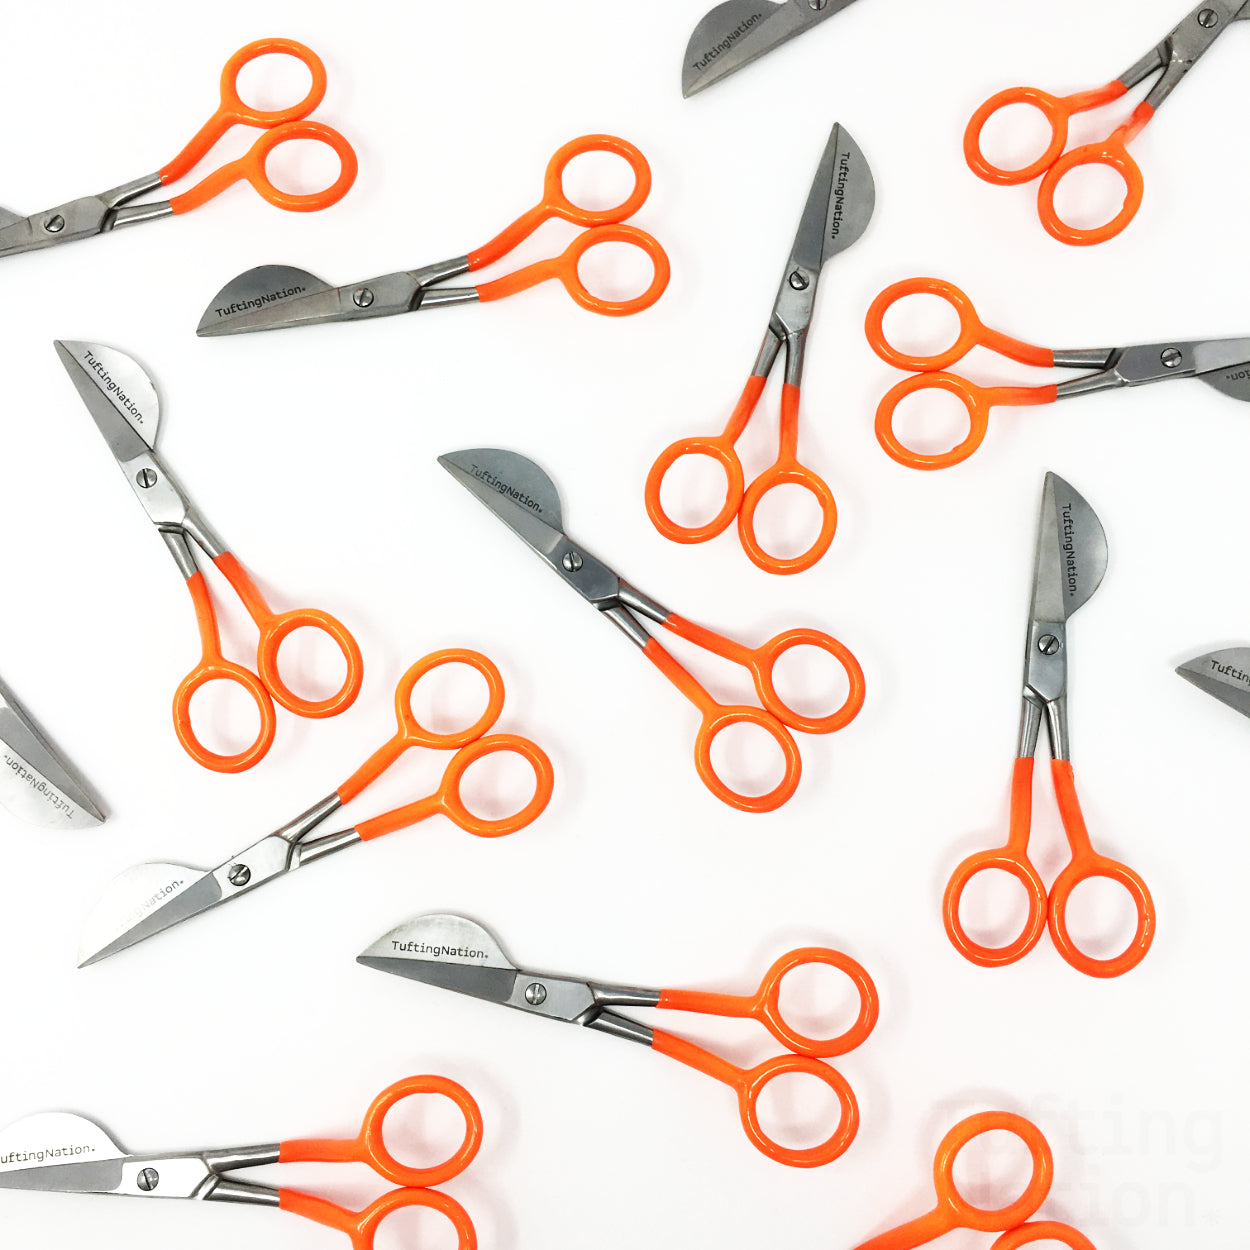 Duckbill Scissors for Trimming the Pile and Edges of Handmade Rugs, 7